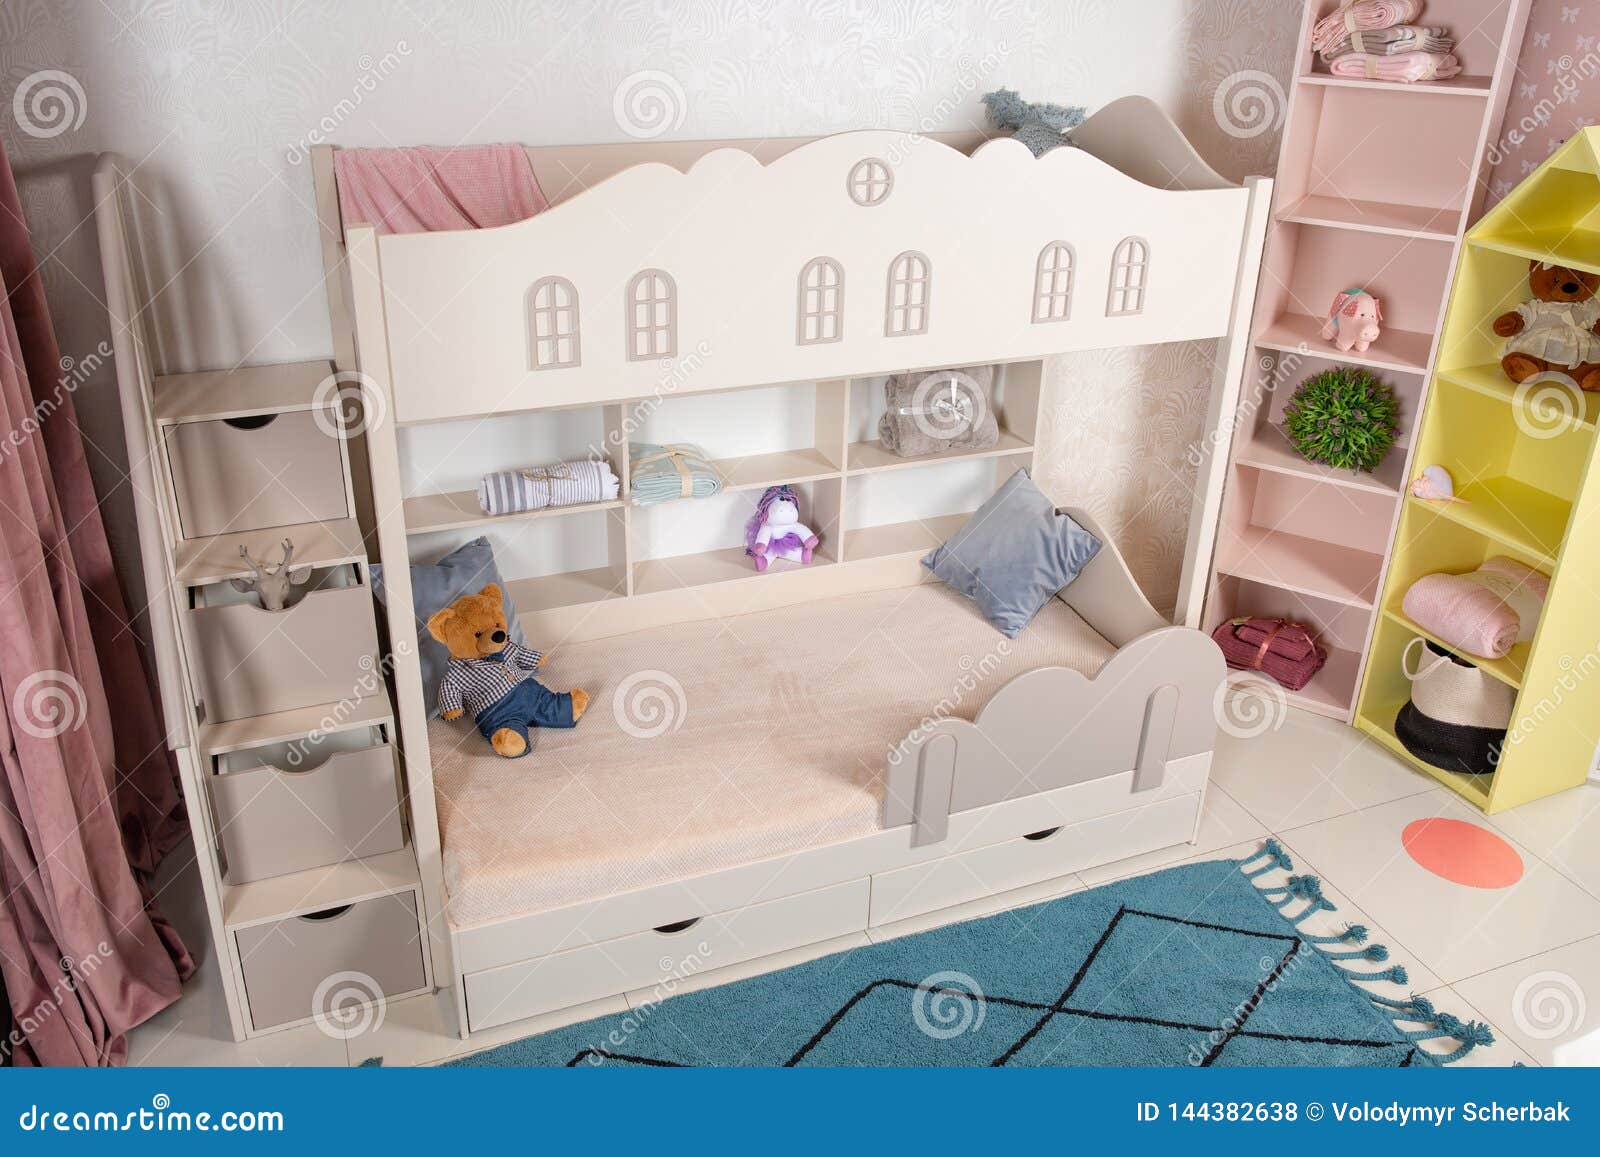 children's room with bunk bed